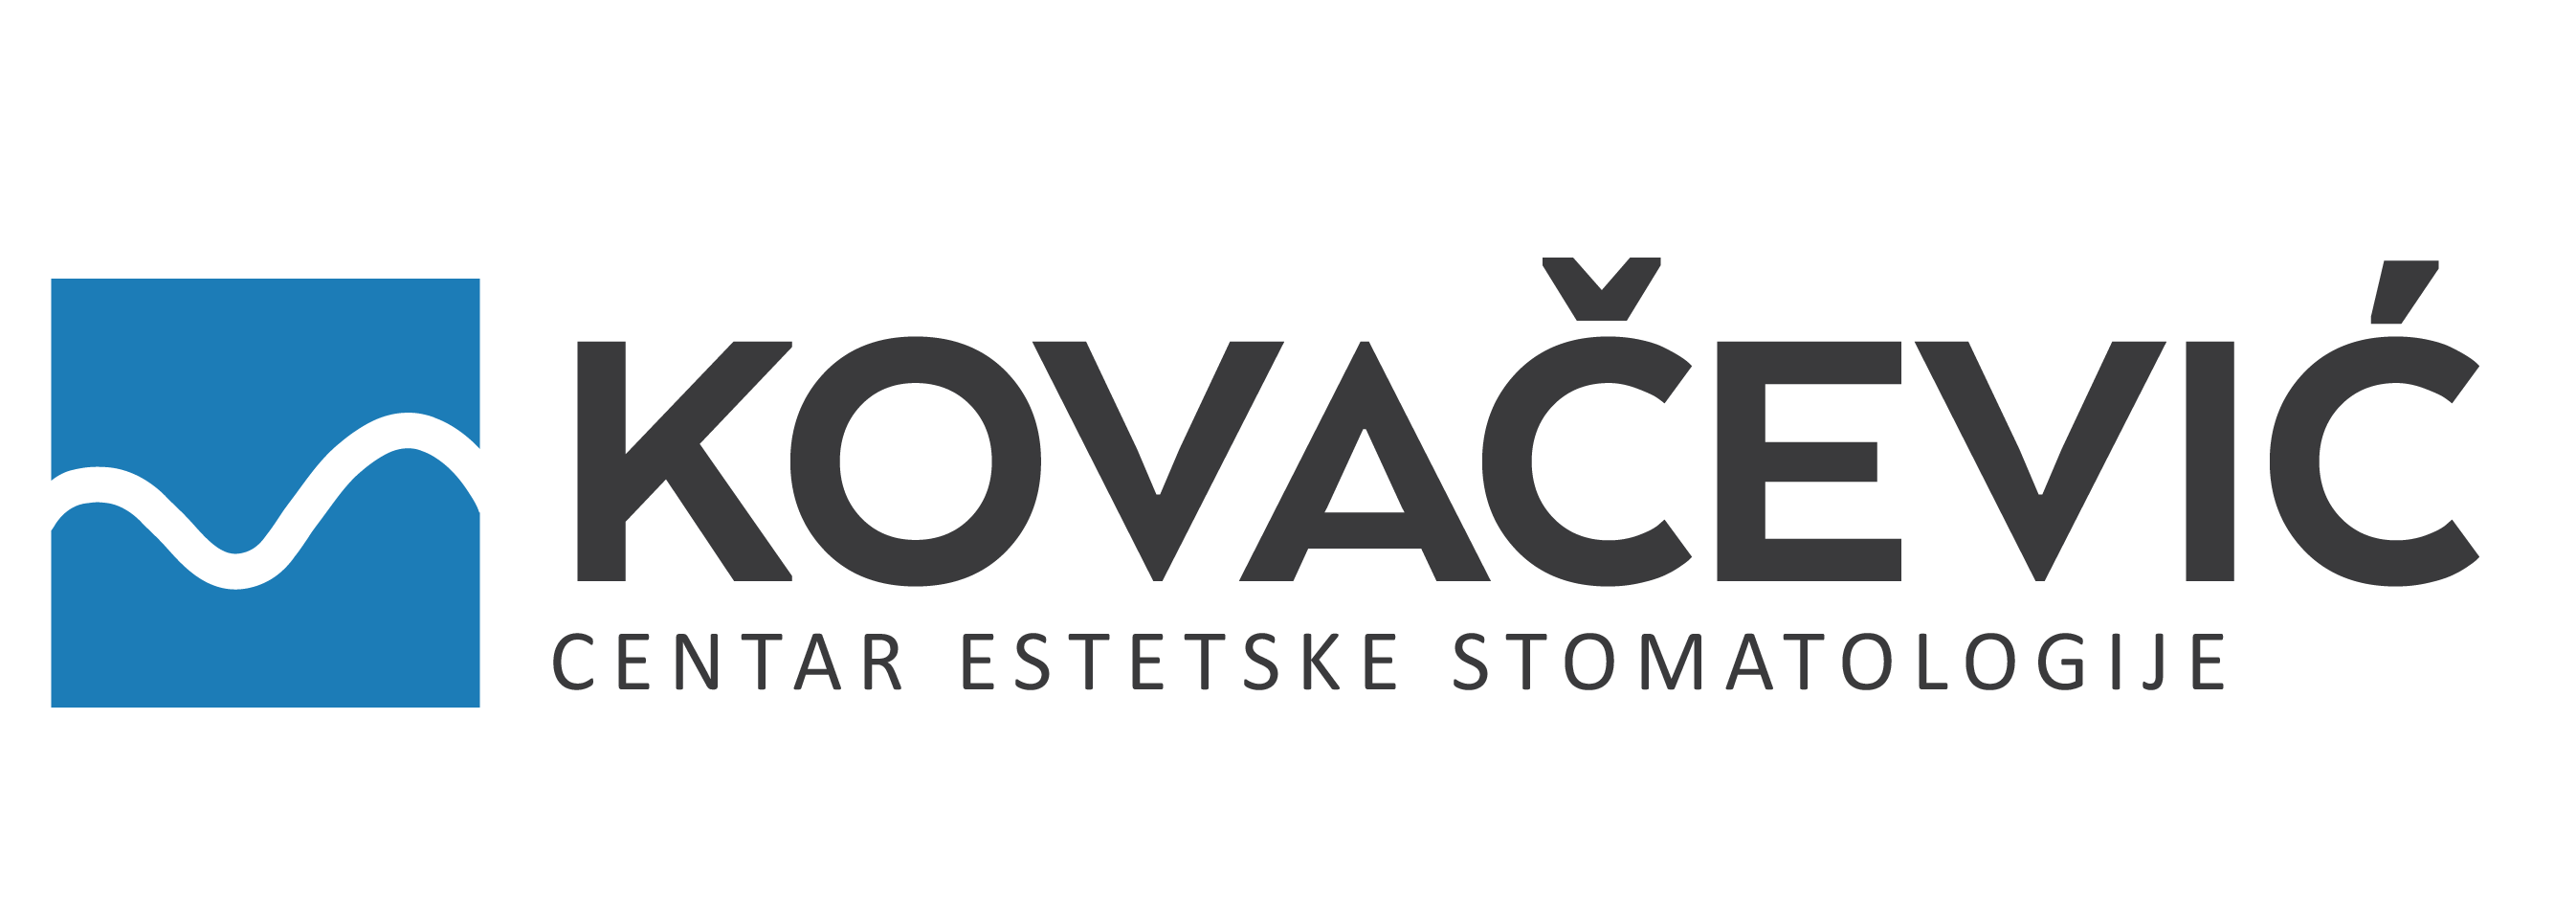 Stomatologija Kovacevic - Logo